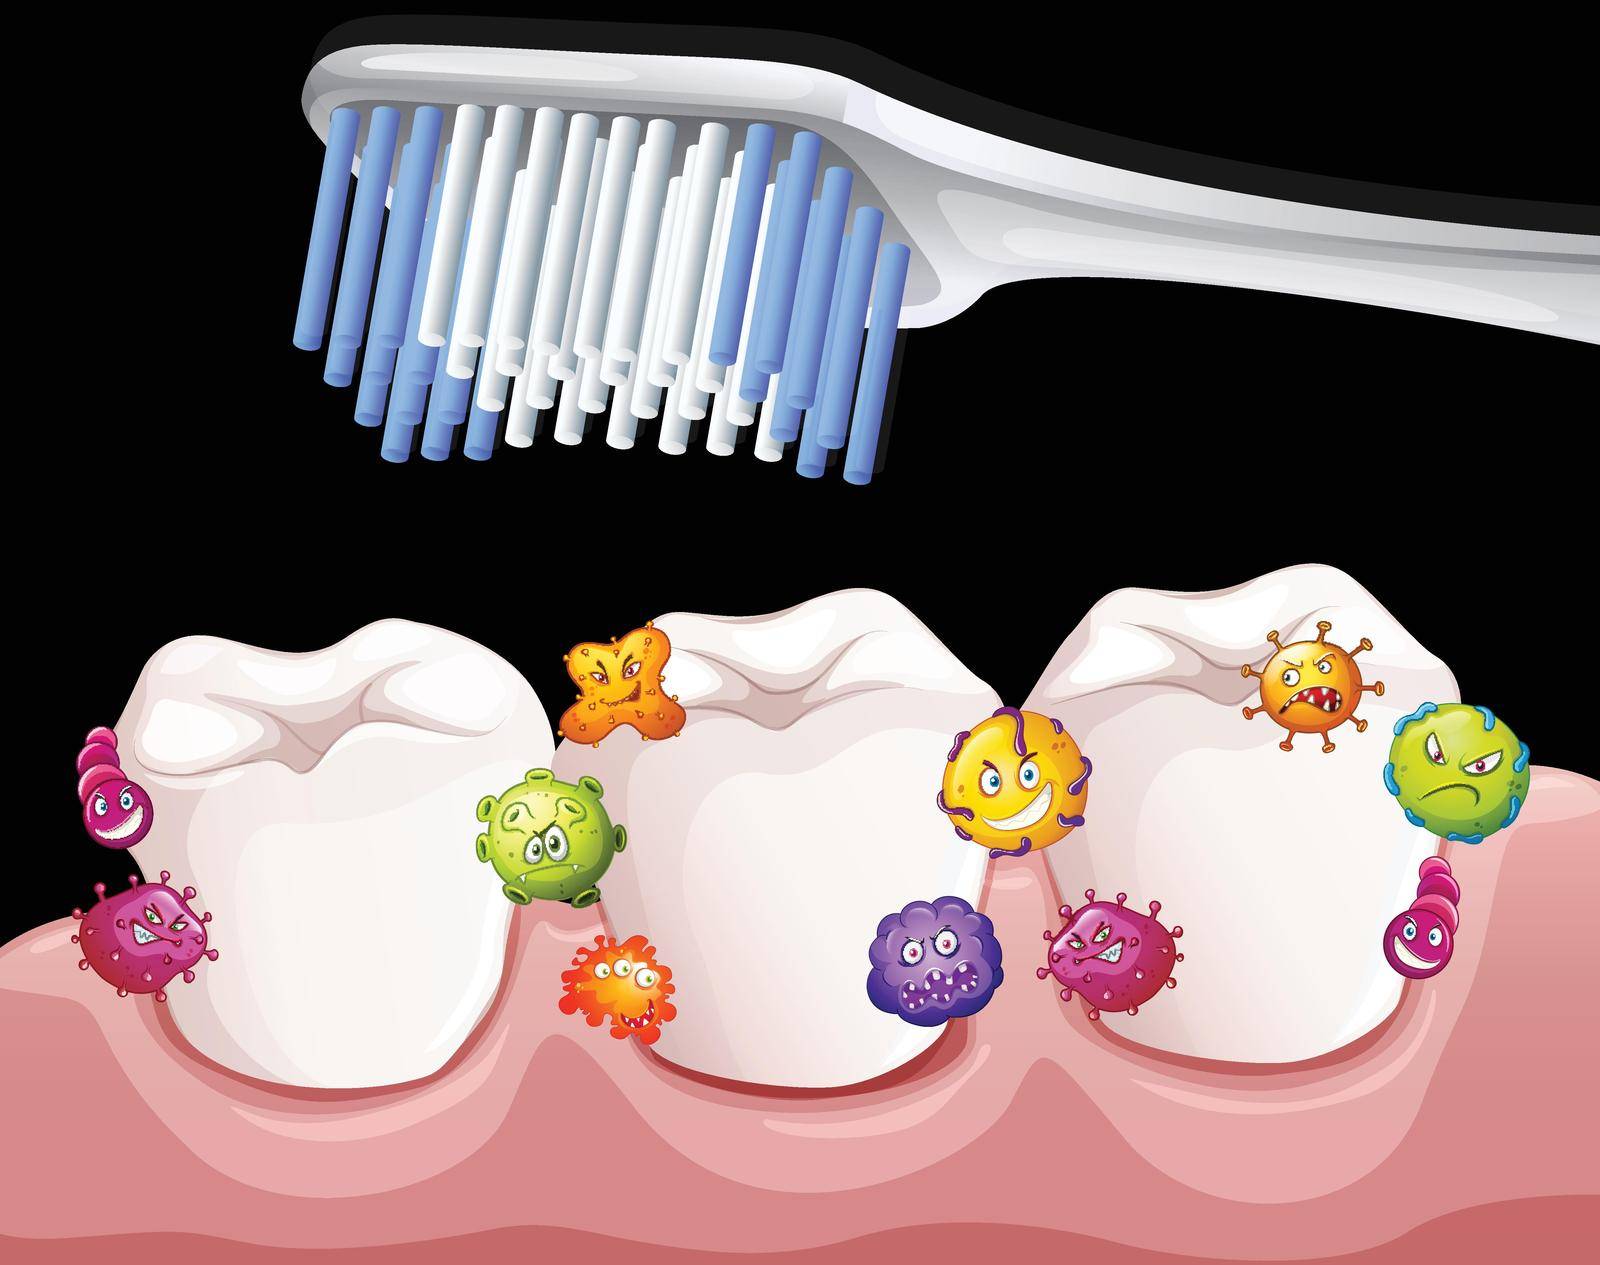 Bacteria between teeth when brushing illustration